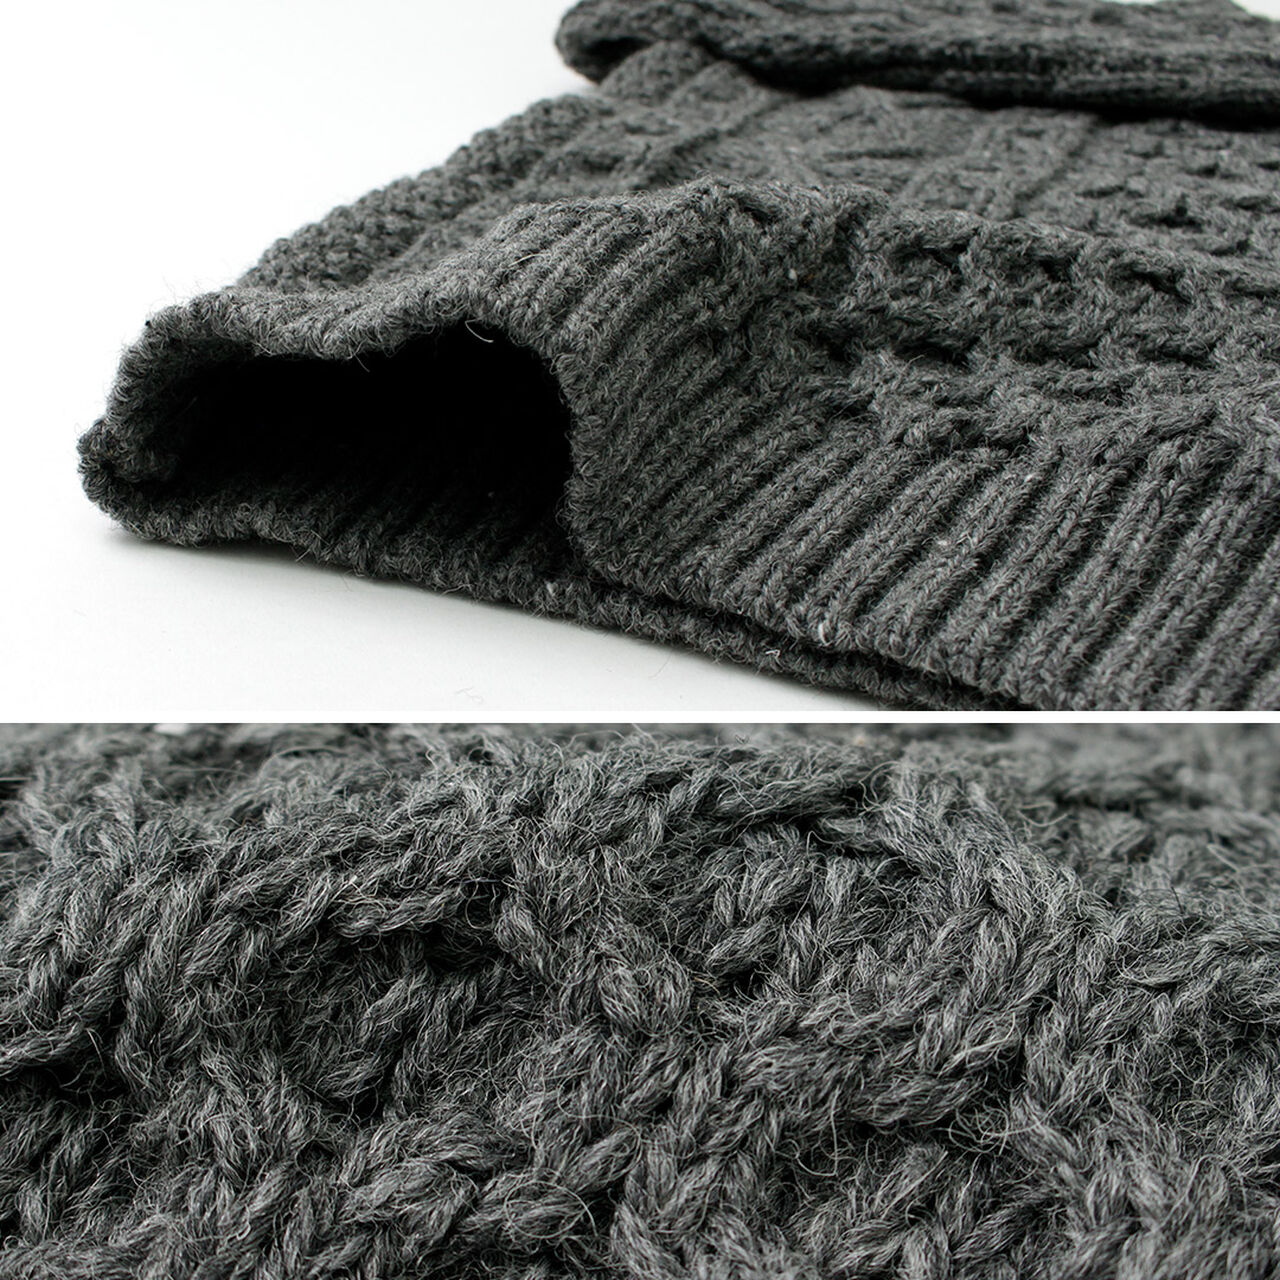 Aran Crafts Irish Soft Cable Knitted Wool Crew Neck Unisex Sweater